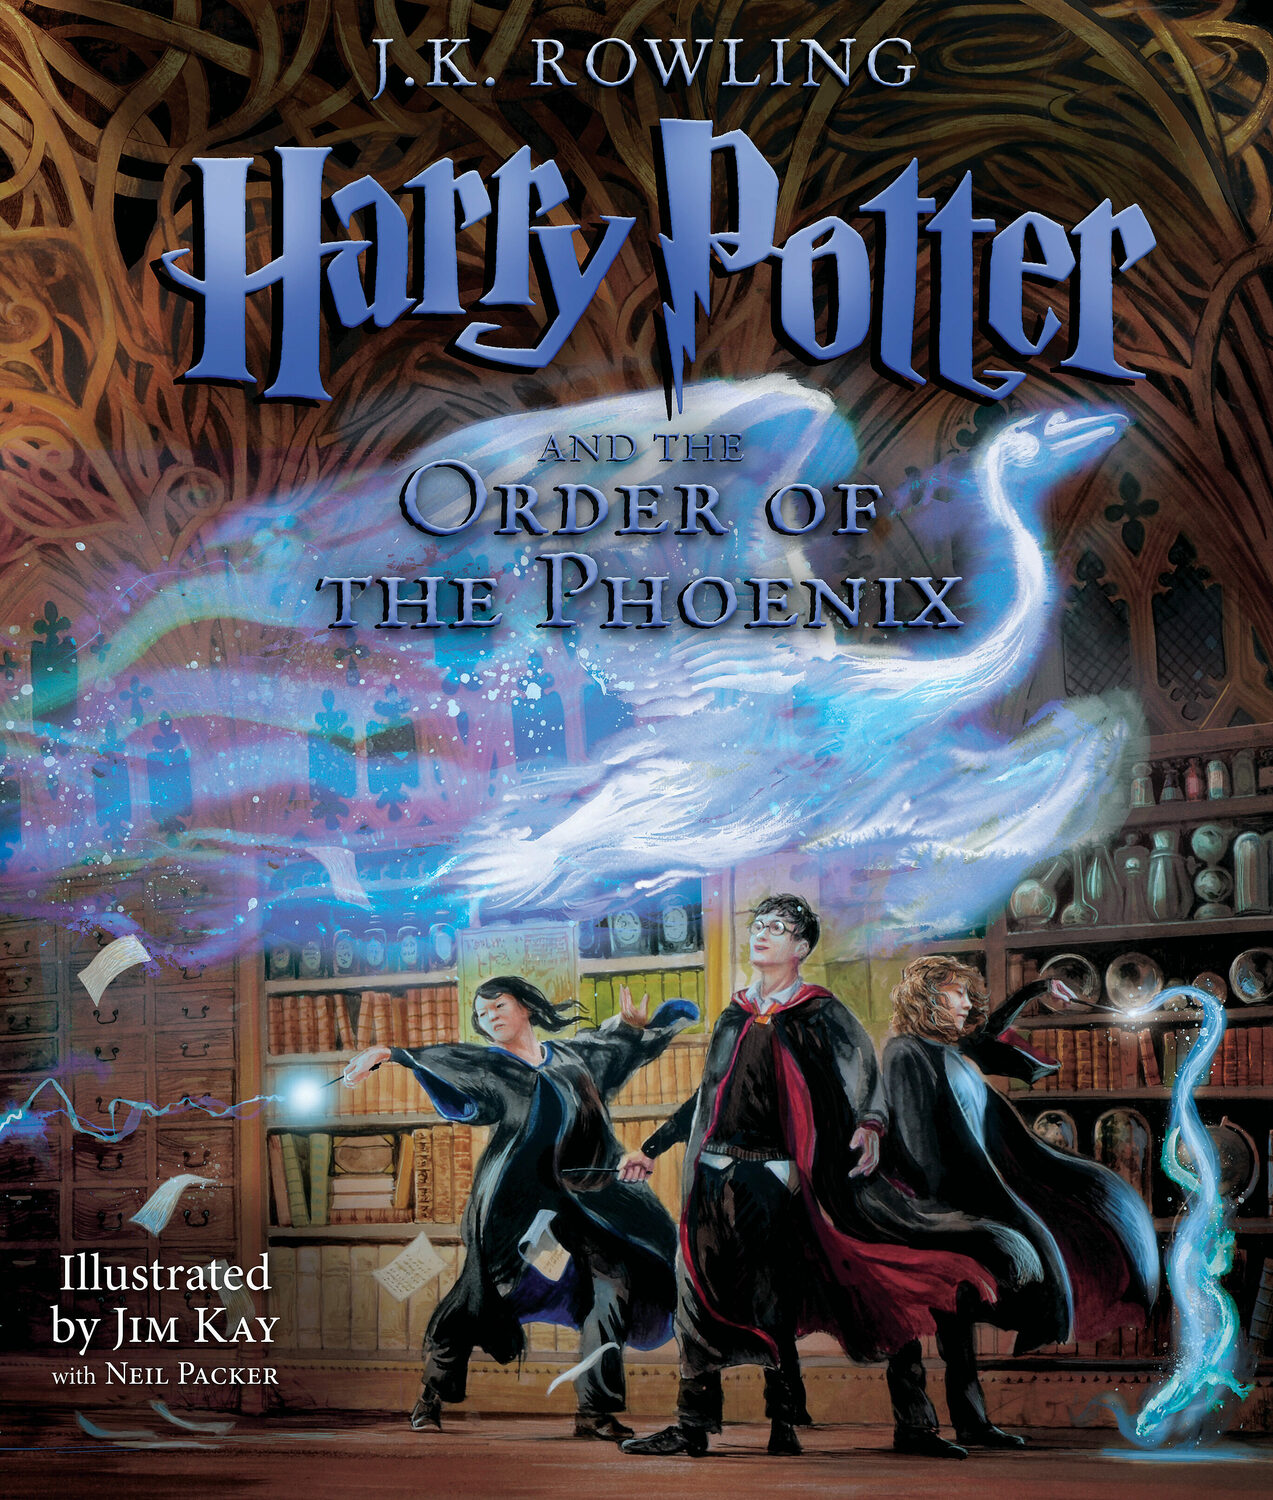 Scholastic Potter Books